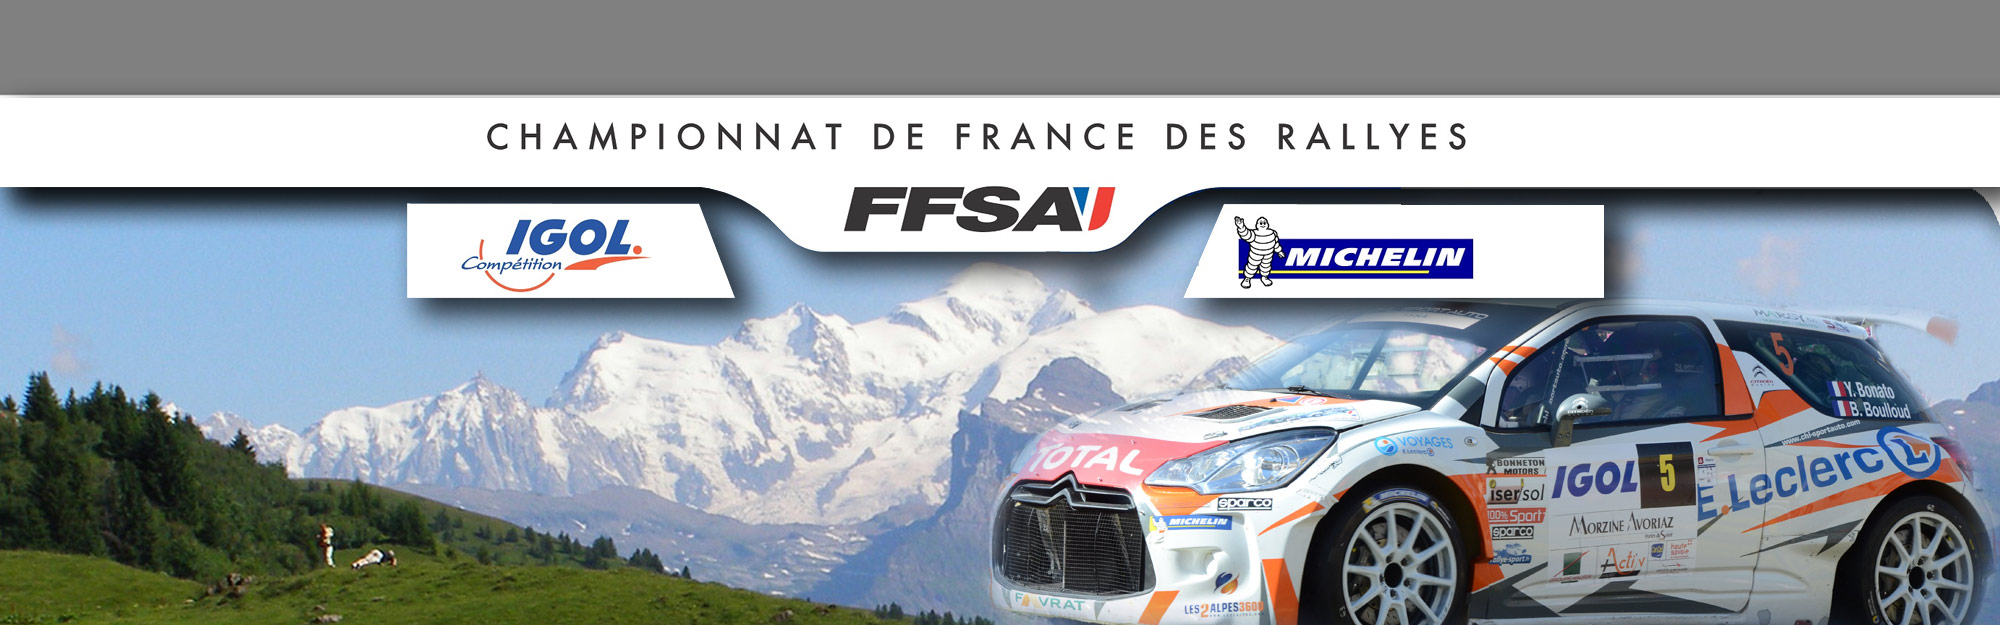 [Rallye] 2019 - Championnat de France asphalte Slide-show2018